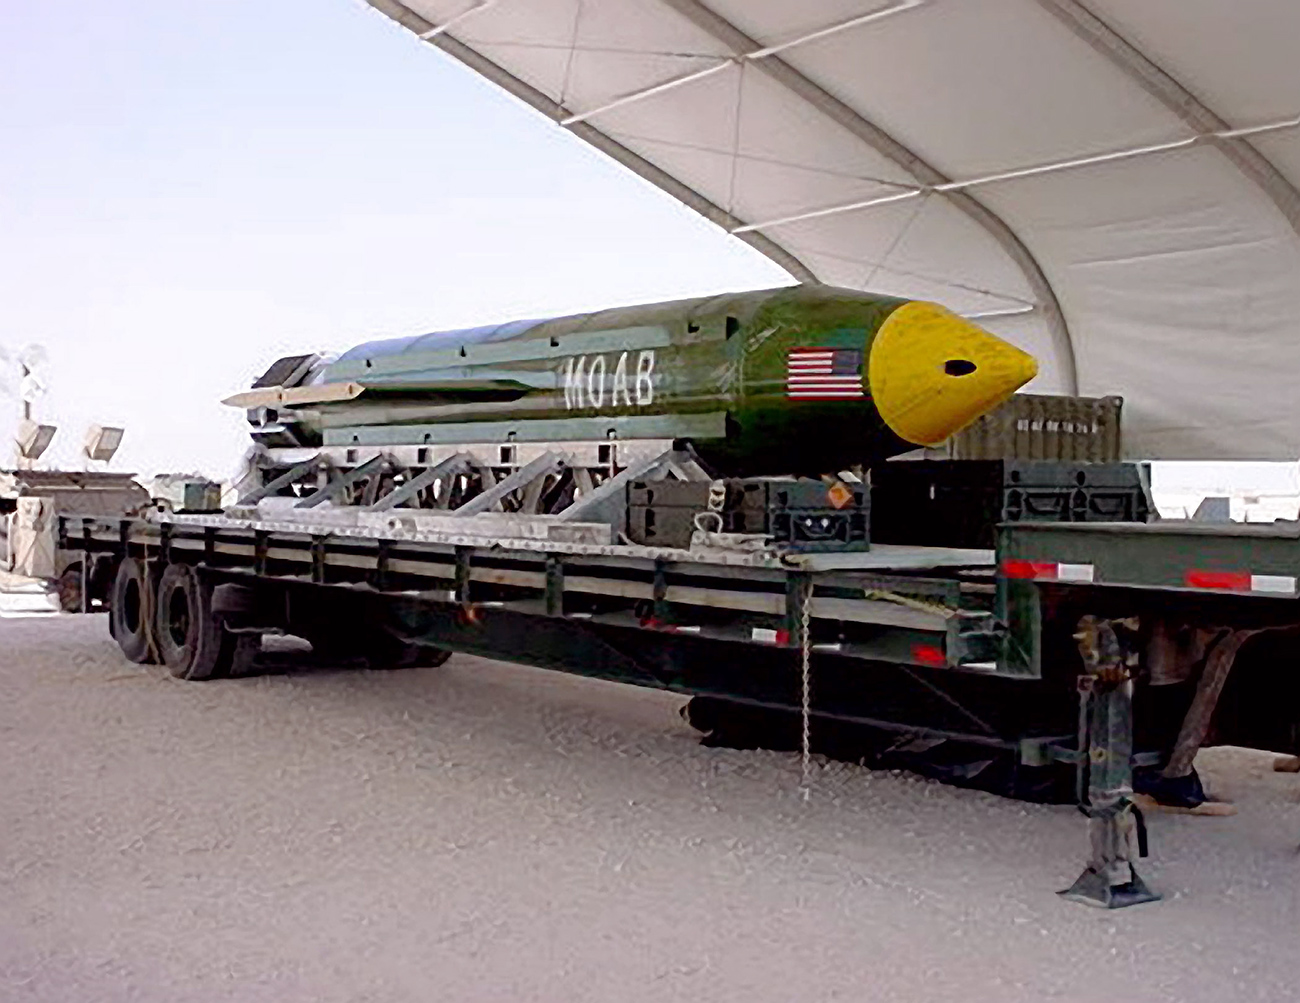 Bom GBU-43/B ditempatkan di sebuah pangkalan udara di Asia Barat Daya, menunggu untuk digunakan jika sewaktu-waktu diperlukan. Sumber: ZUMA Press/Global Look Press